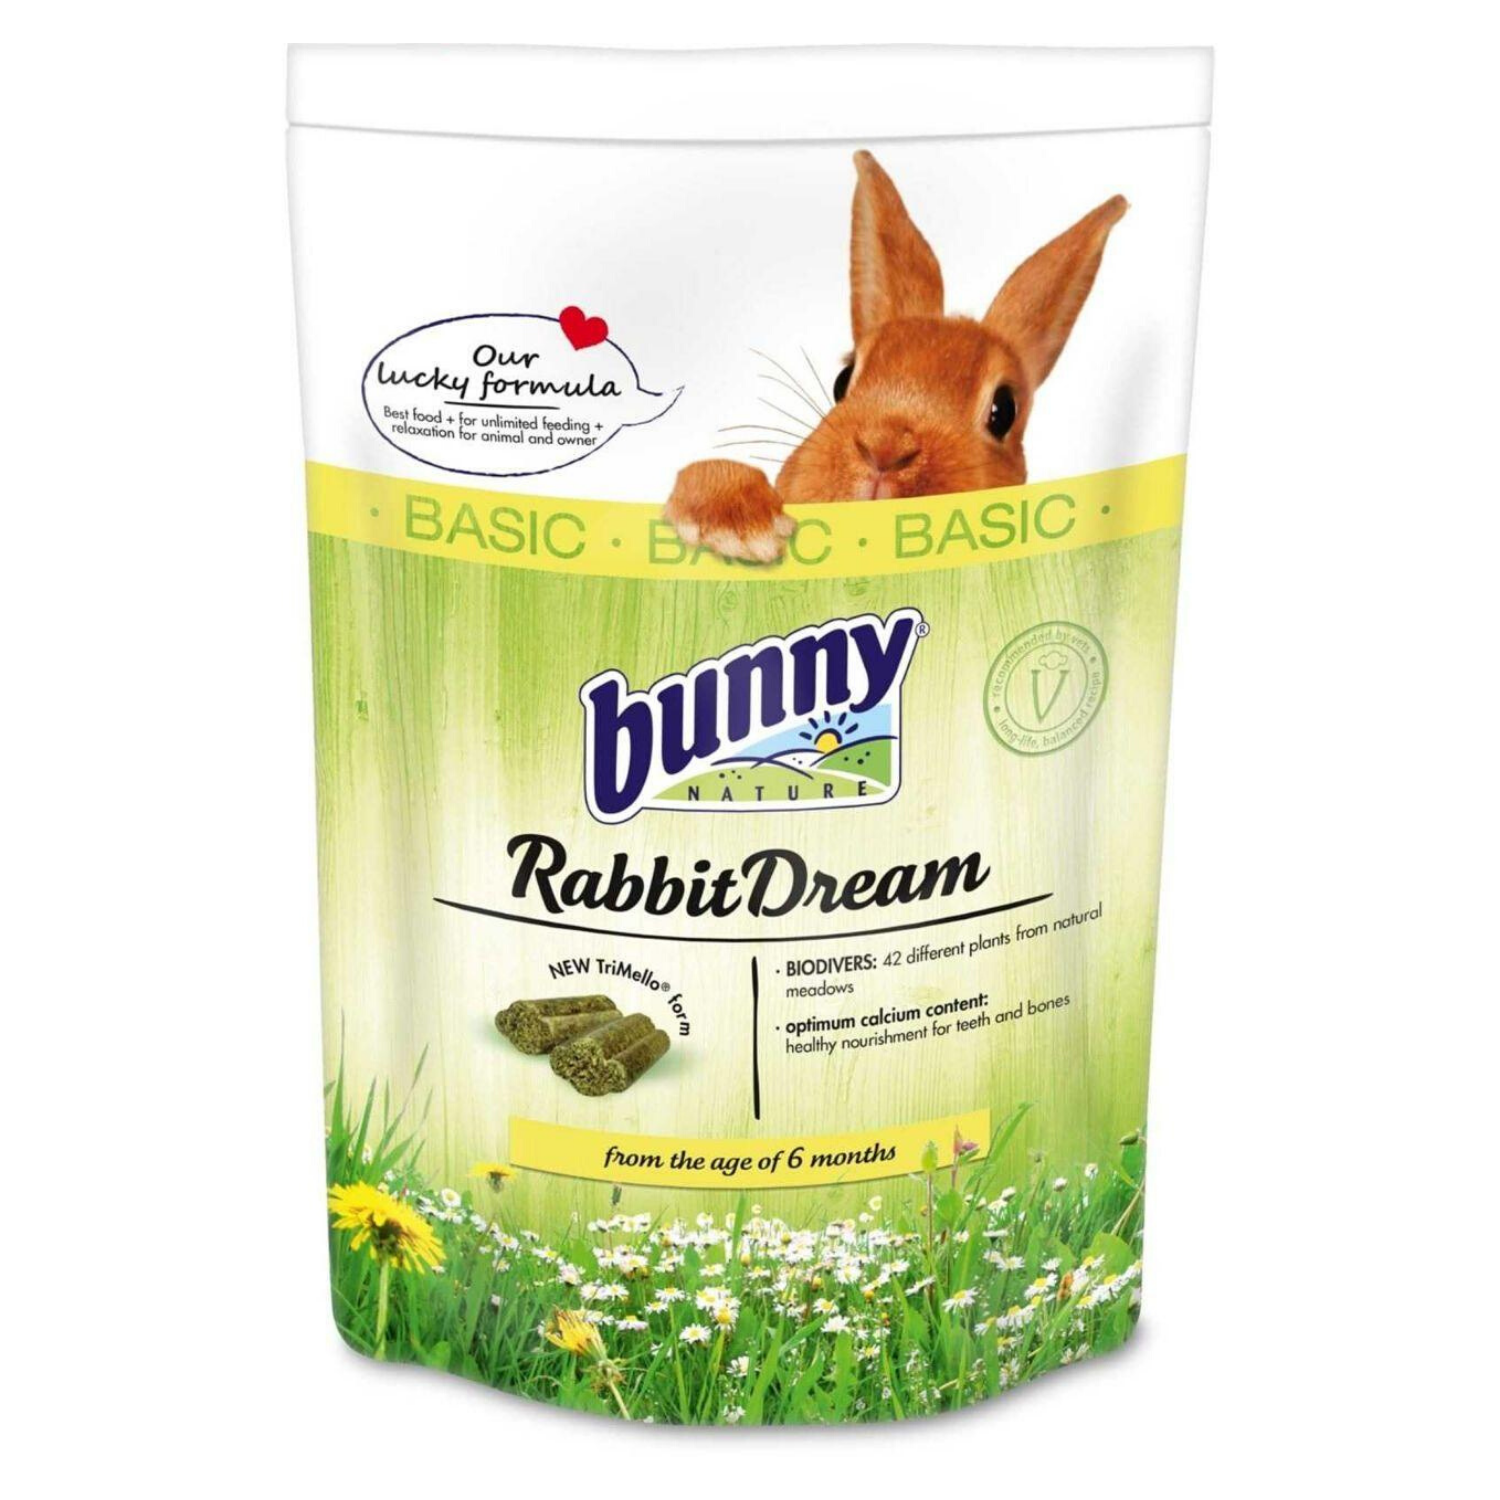 [SAMPLE] Bunny Nature Rabbit Dream Basic - 150g